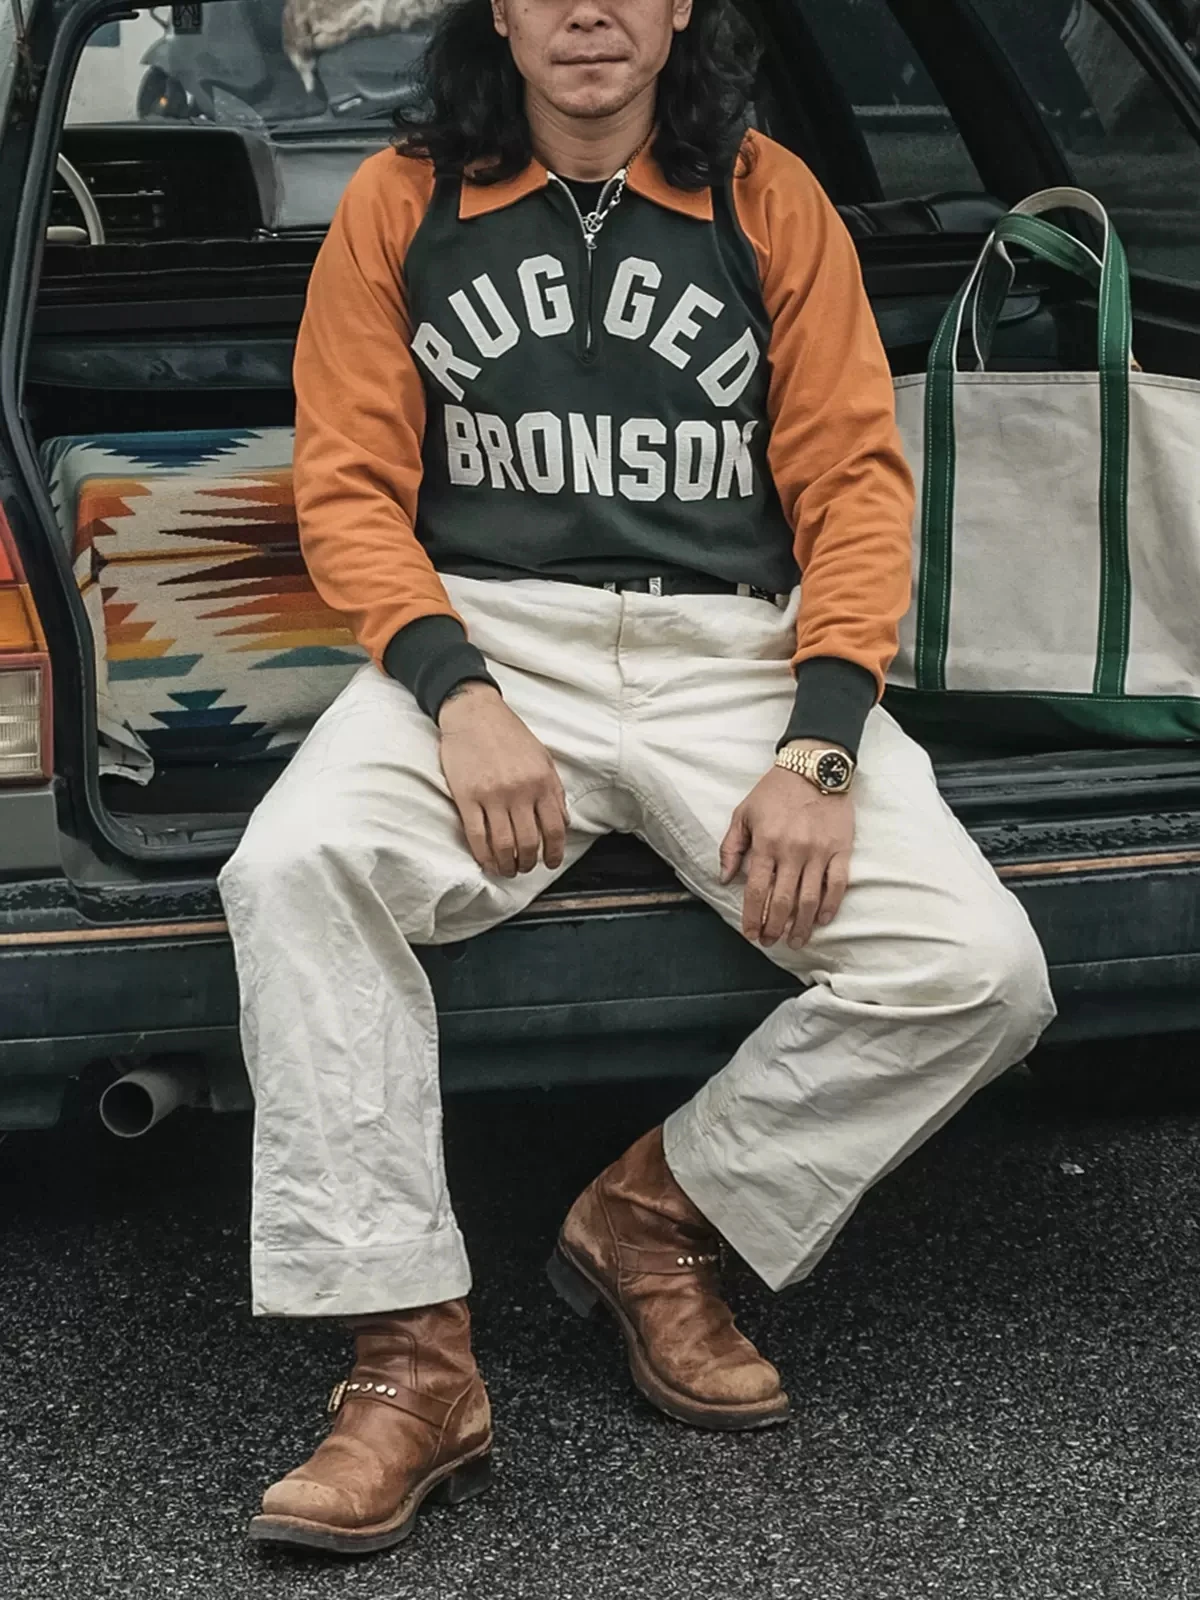 

Bronson Vintage Motorcycle Two-Tone T-Shirt Quarter Zip Racing Jersey Men's Tee